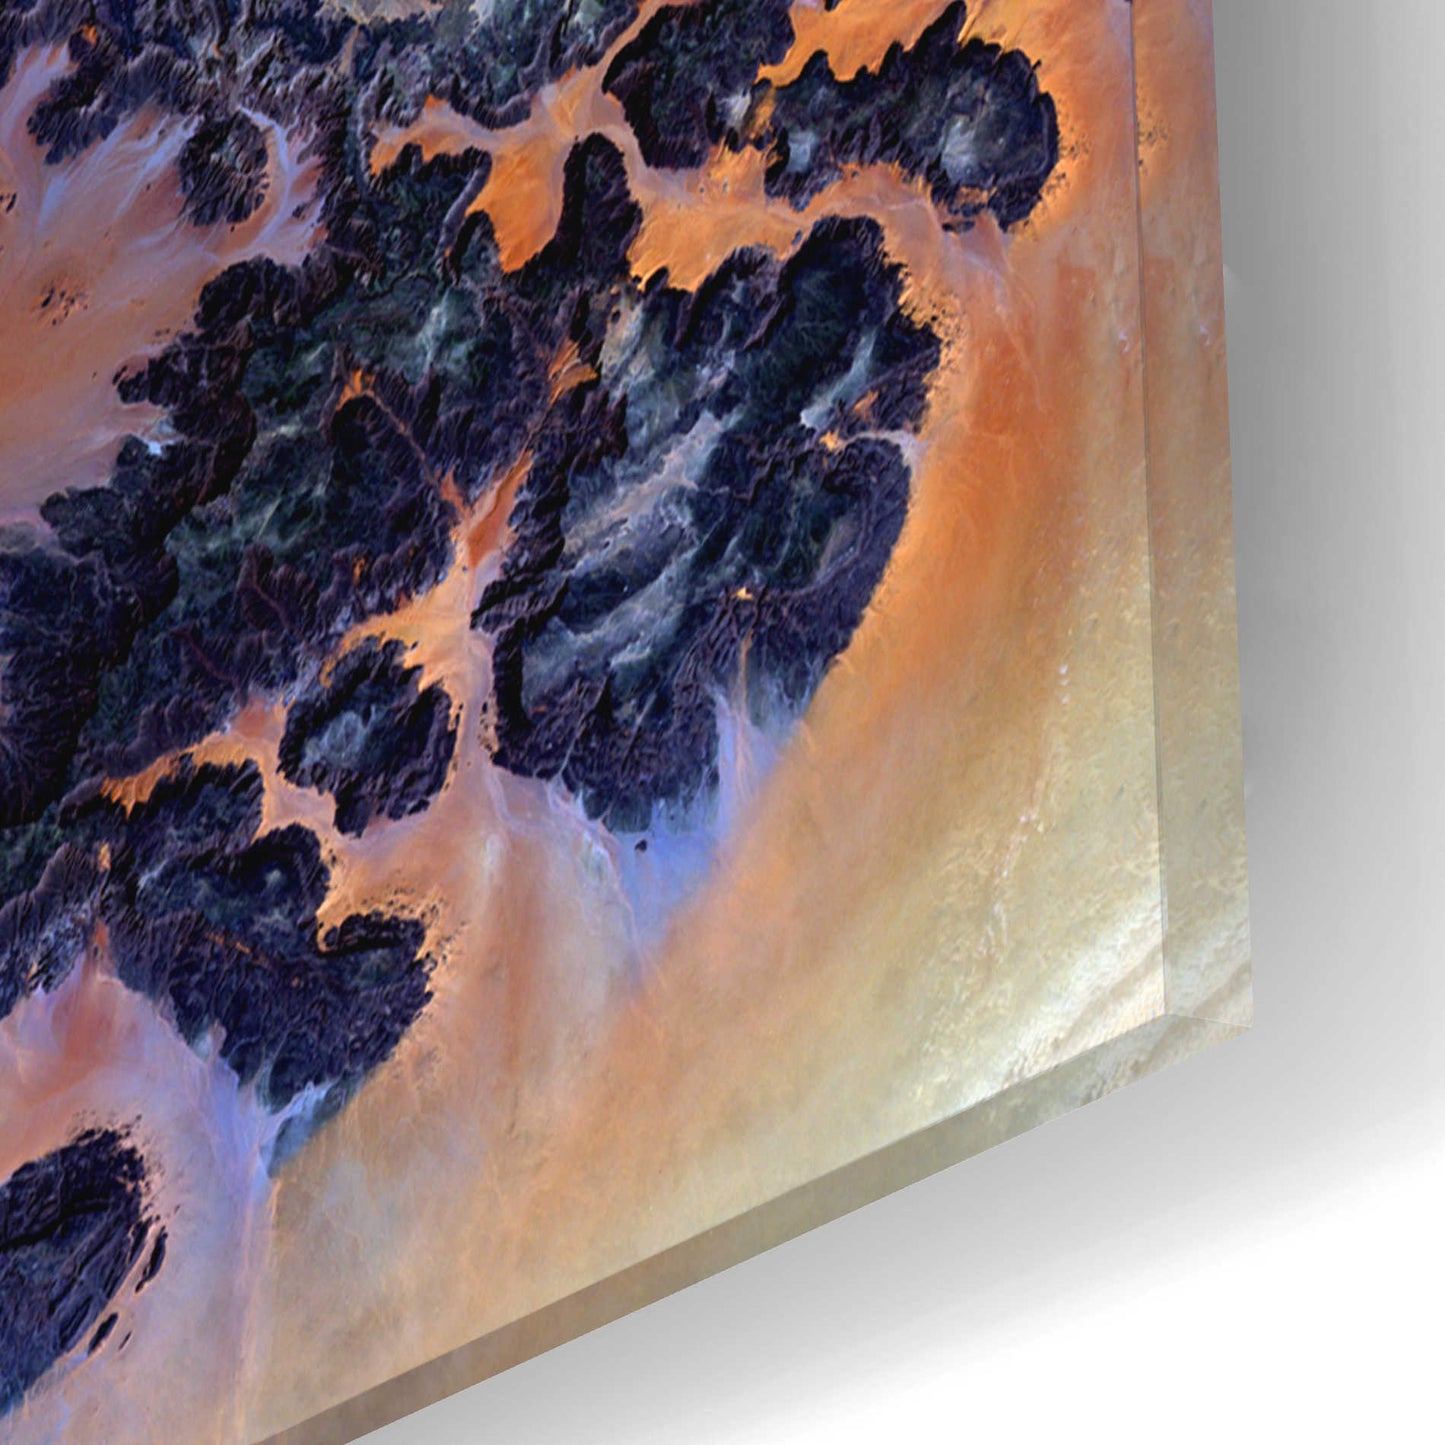 Epic Art 'Earth as Art: Terkezi Oasis' Acrylic Glass Wall Art,12x12